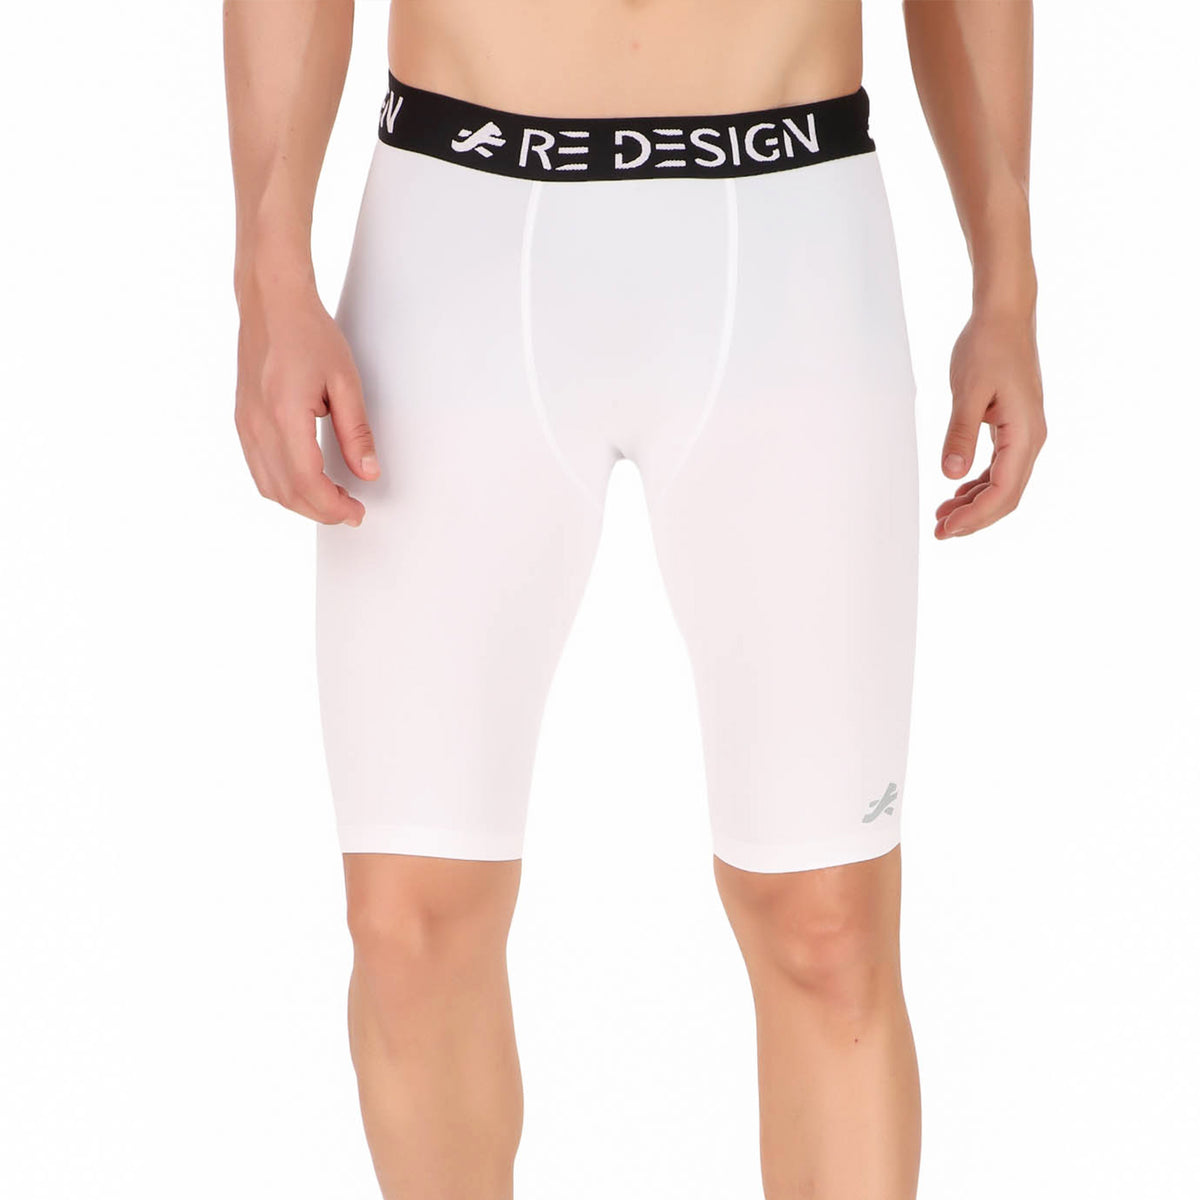 Nylon Compression Shorts and Half Tights For Men (White)